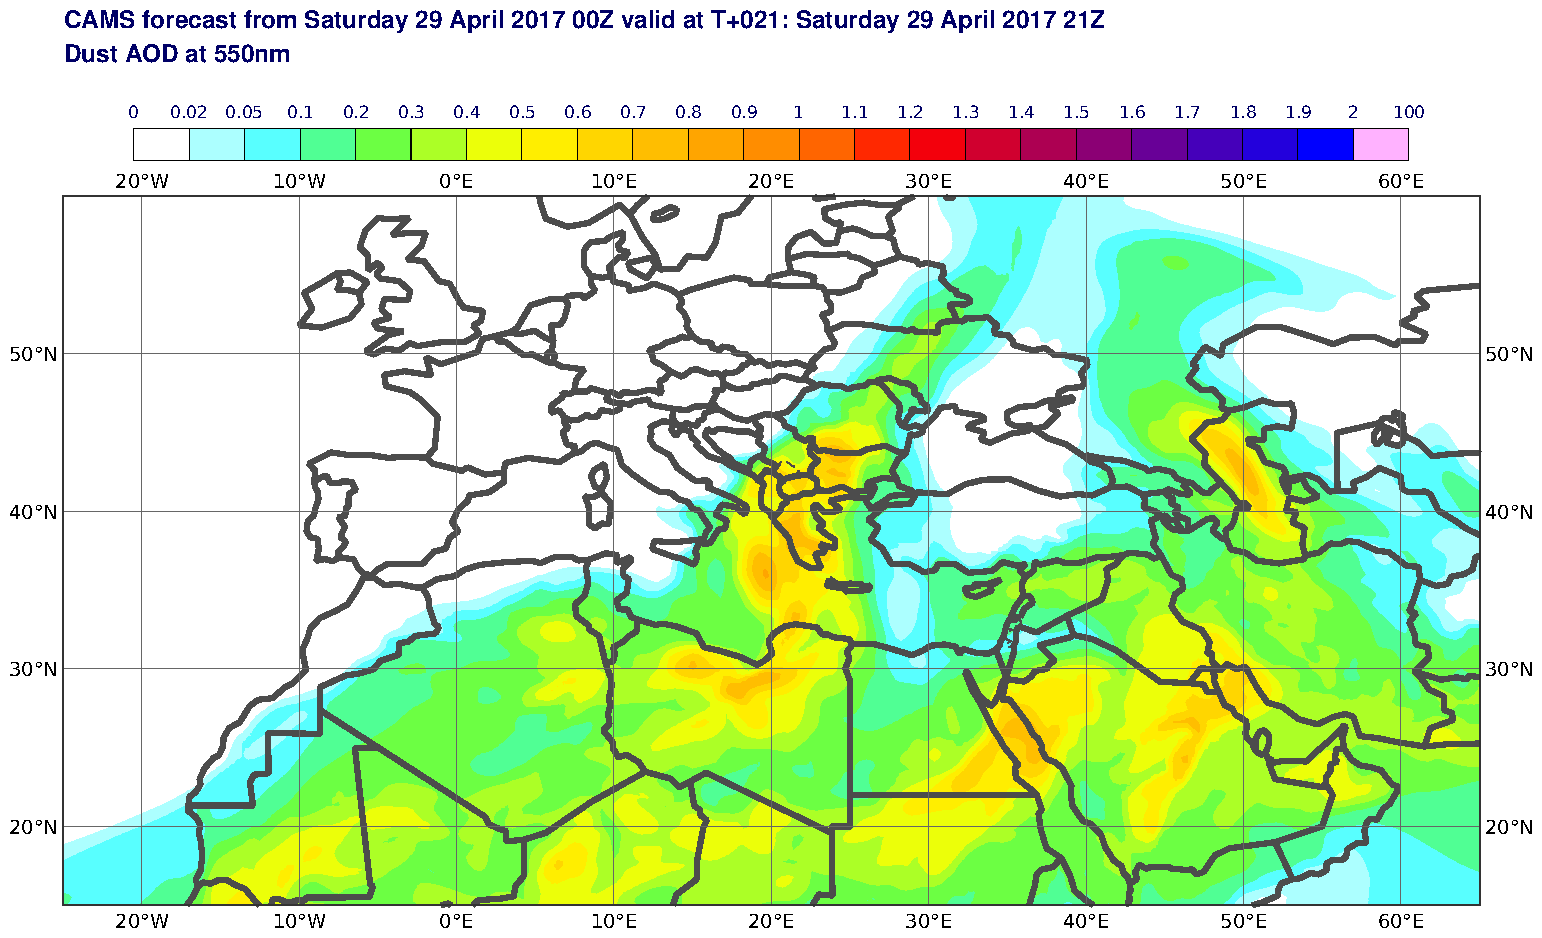 Dust AOD at 550nm valid at T21 - 2017-04-29 21:00